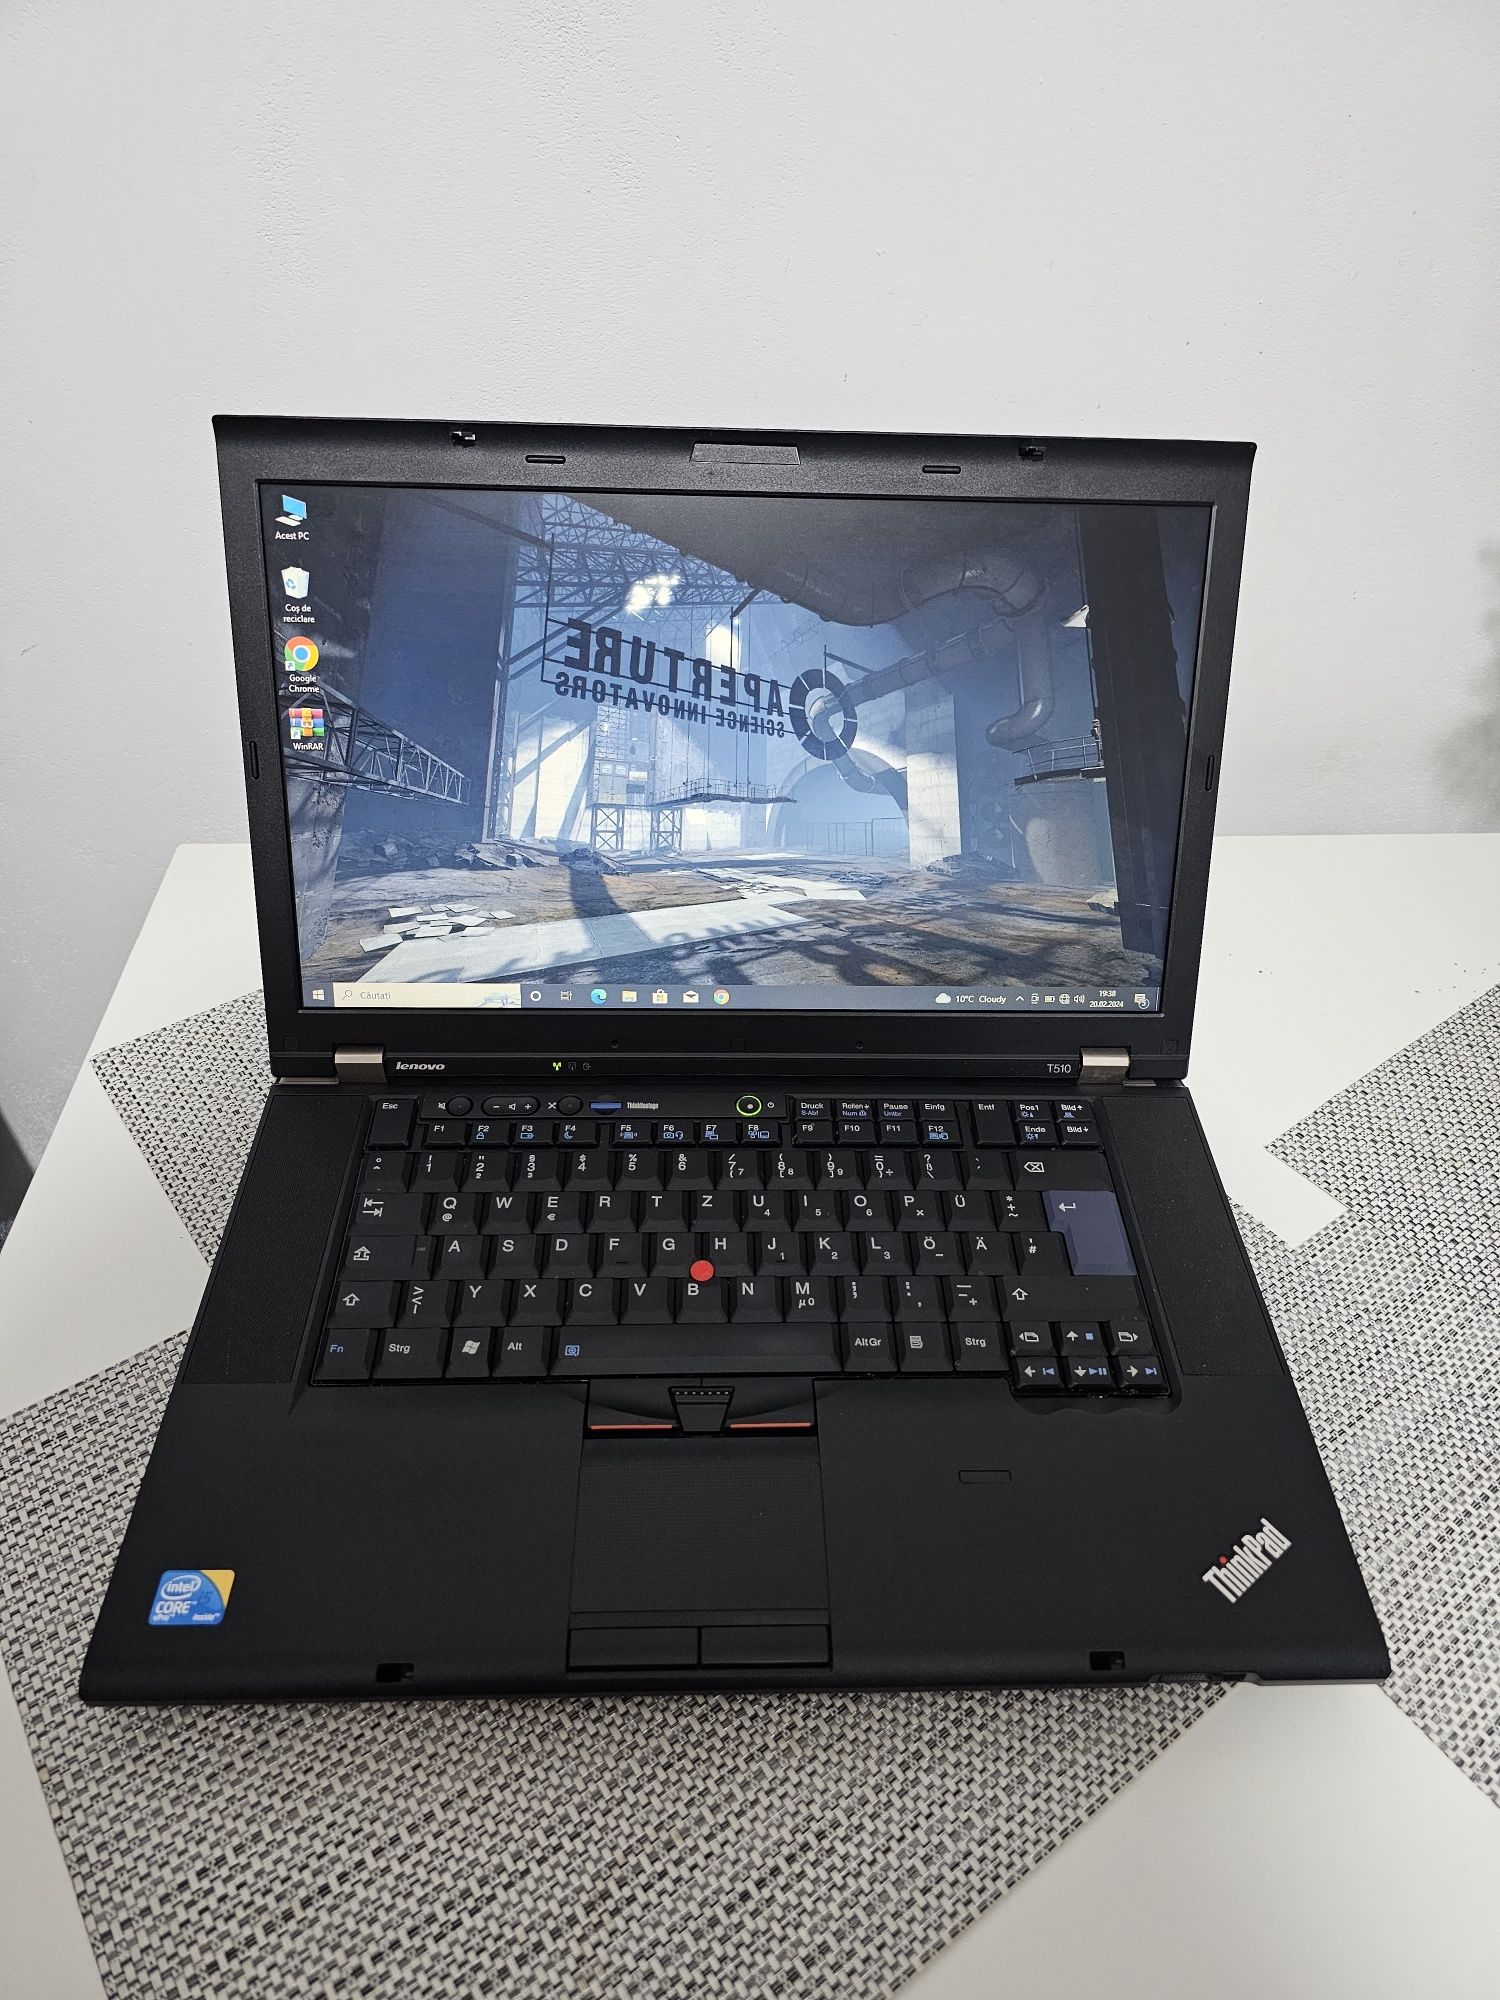 Laptop Lenovo Thinkpad i5 
Procesor i5 2.4Ghz 
Ram 4gb
Ssd 120gb
Bater